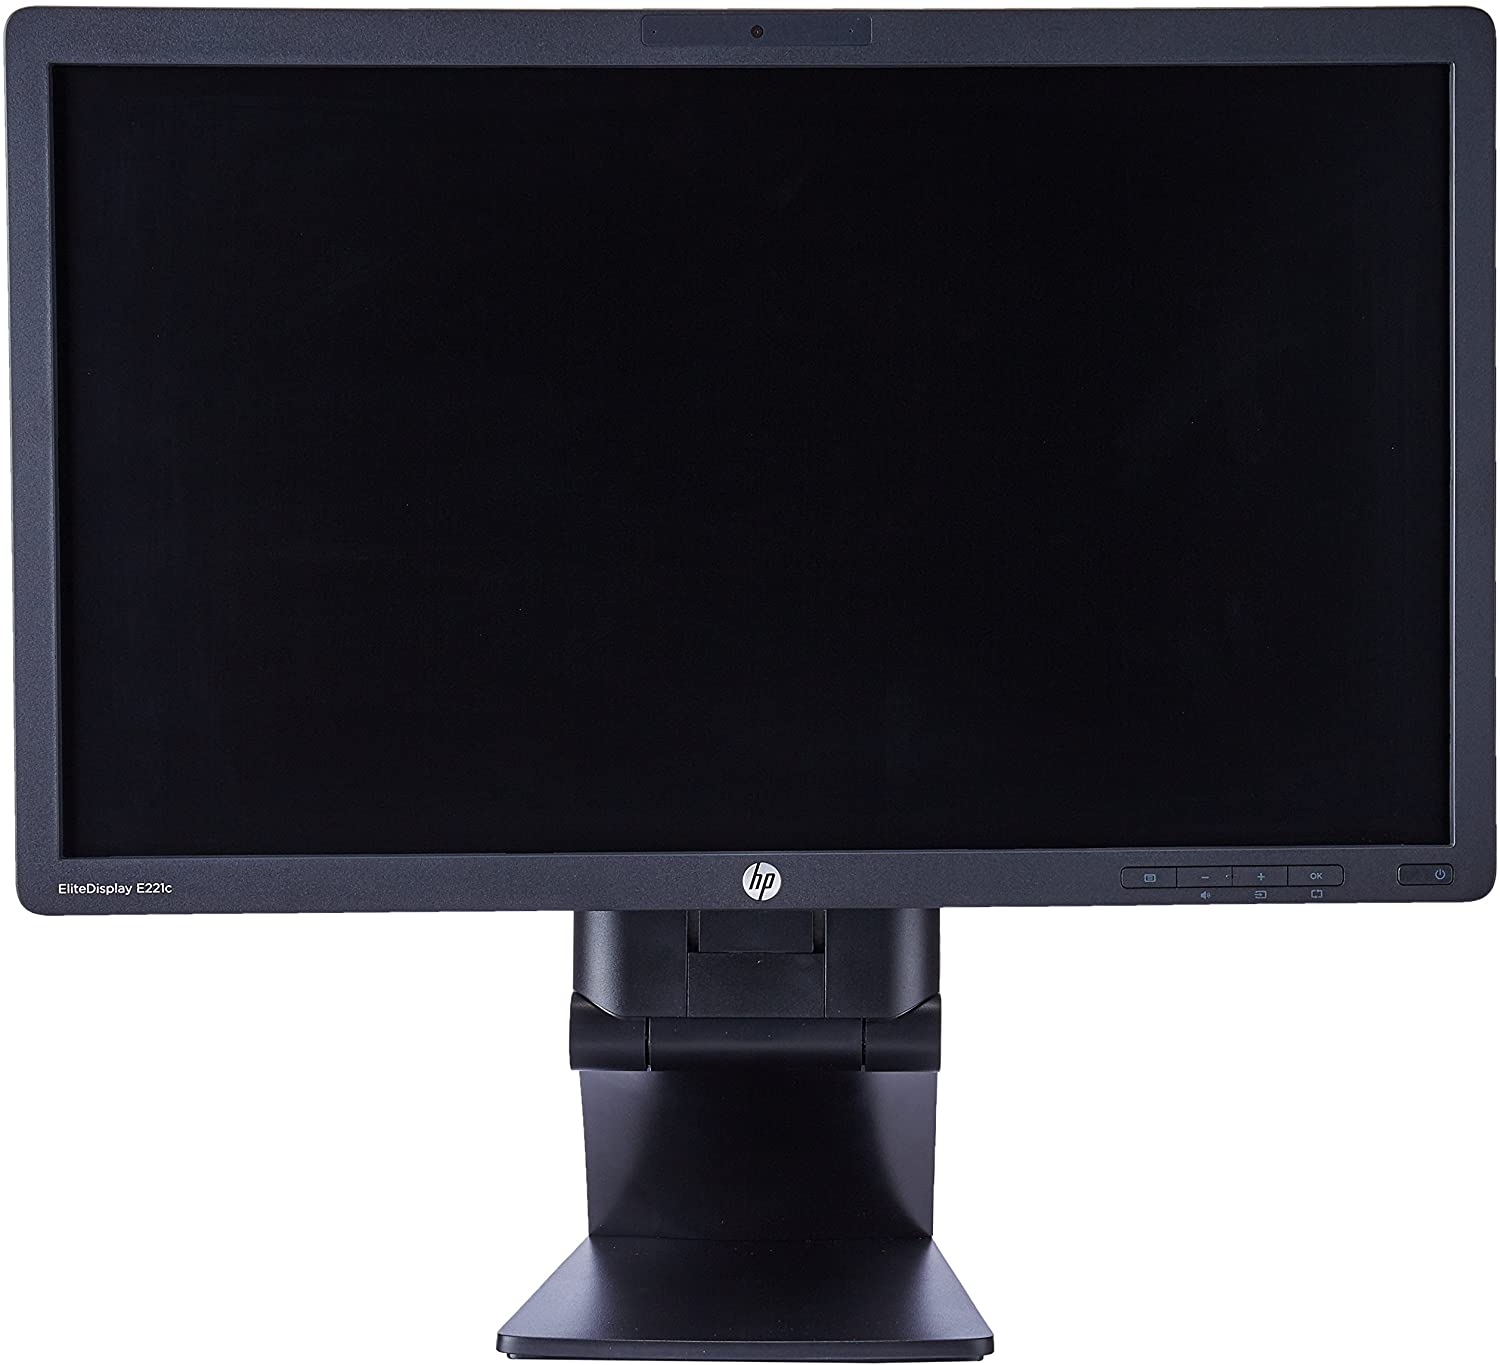 hp e221c monitor - rayanstar